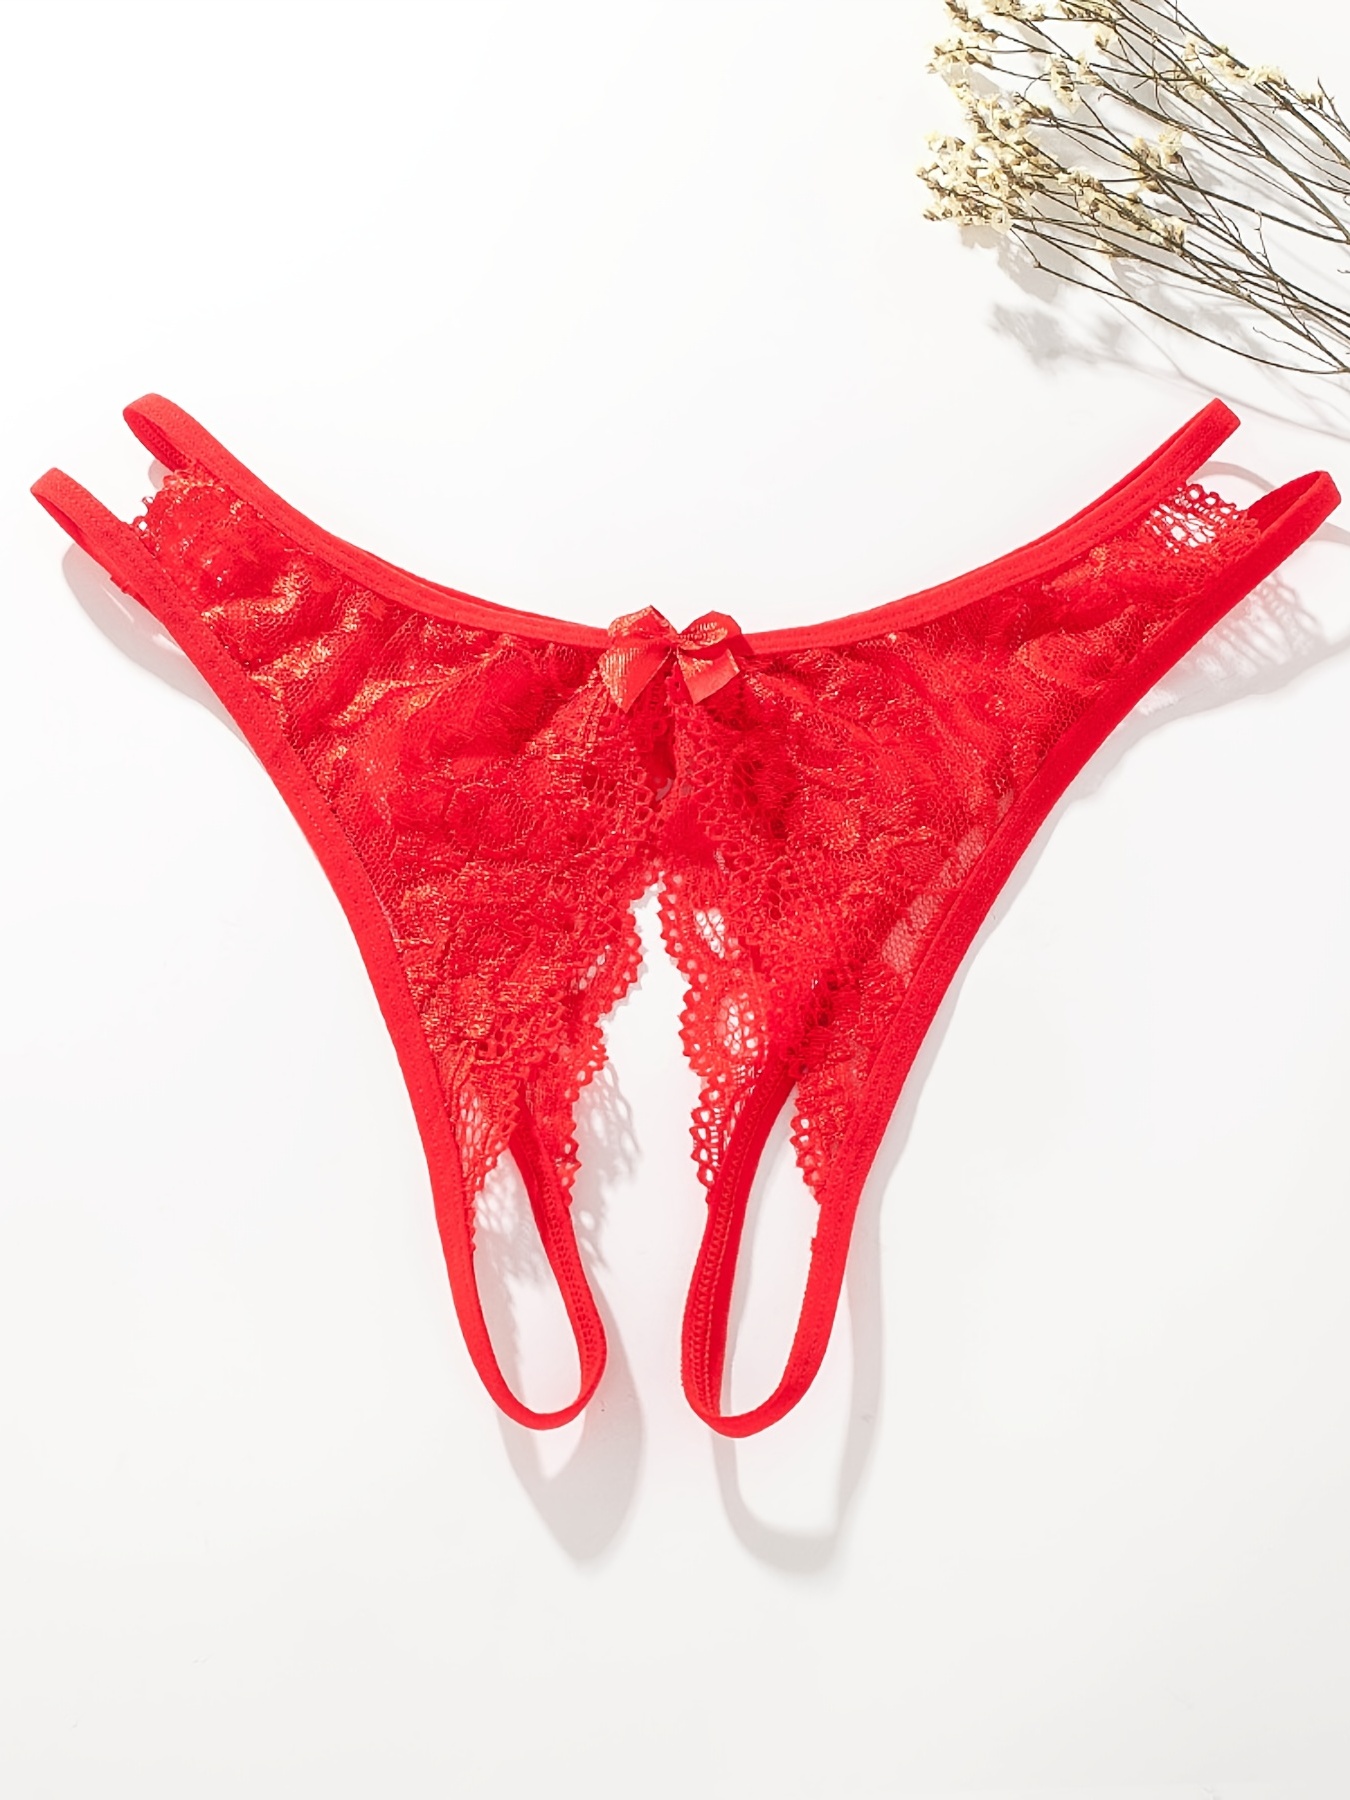 Briefs Thongs G-String Open Crotch Panties Lace Underwear Women's Lingerie  SIZE